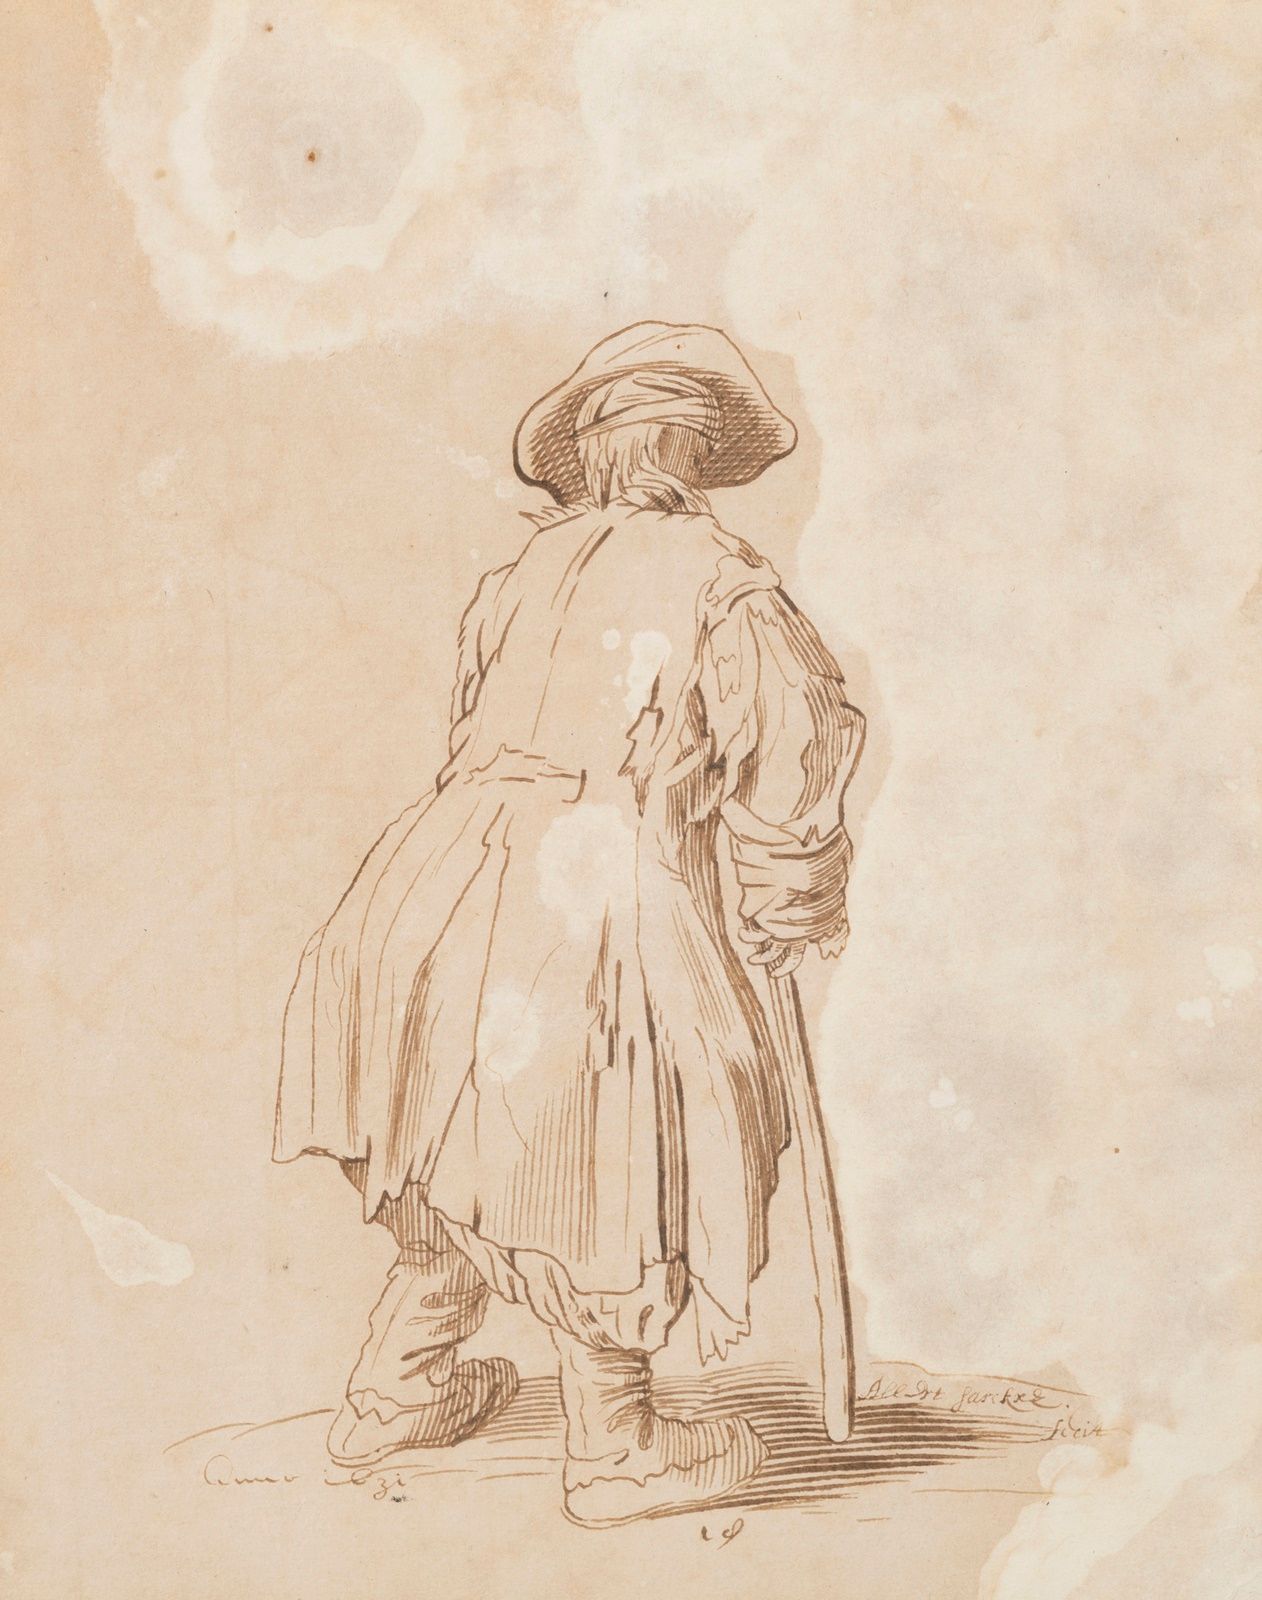 Null Escuela francesa del siglo XIX
Retrato de un mendigo 
Tinta
19 x 15 cm.